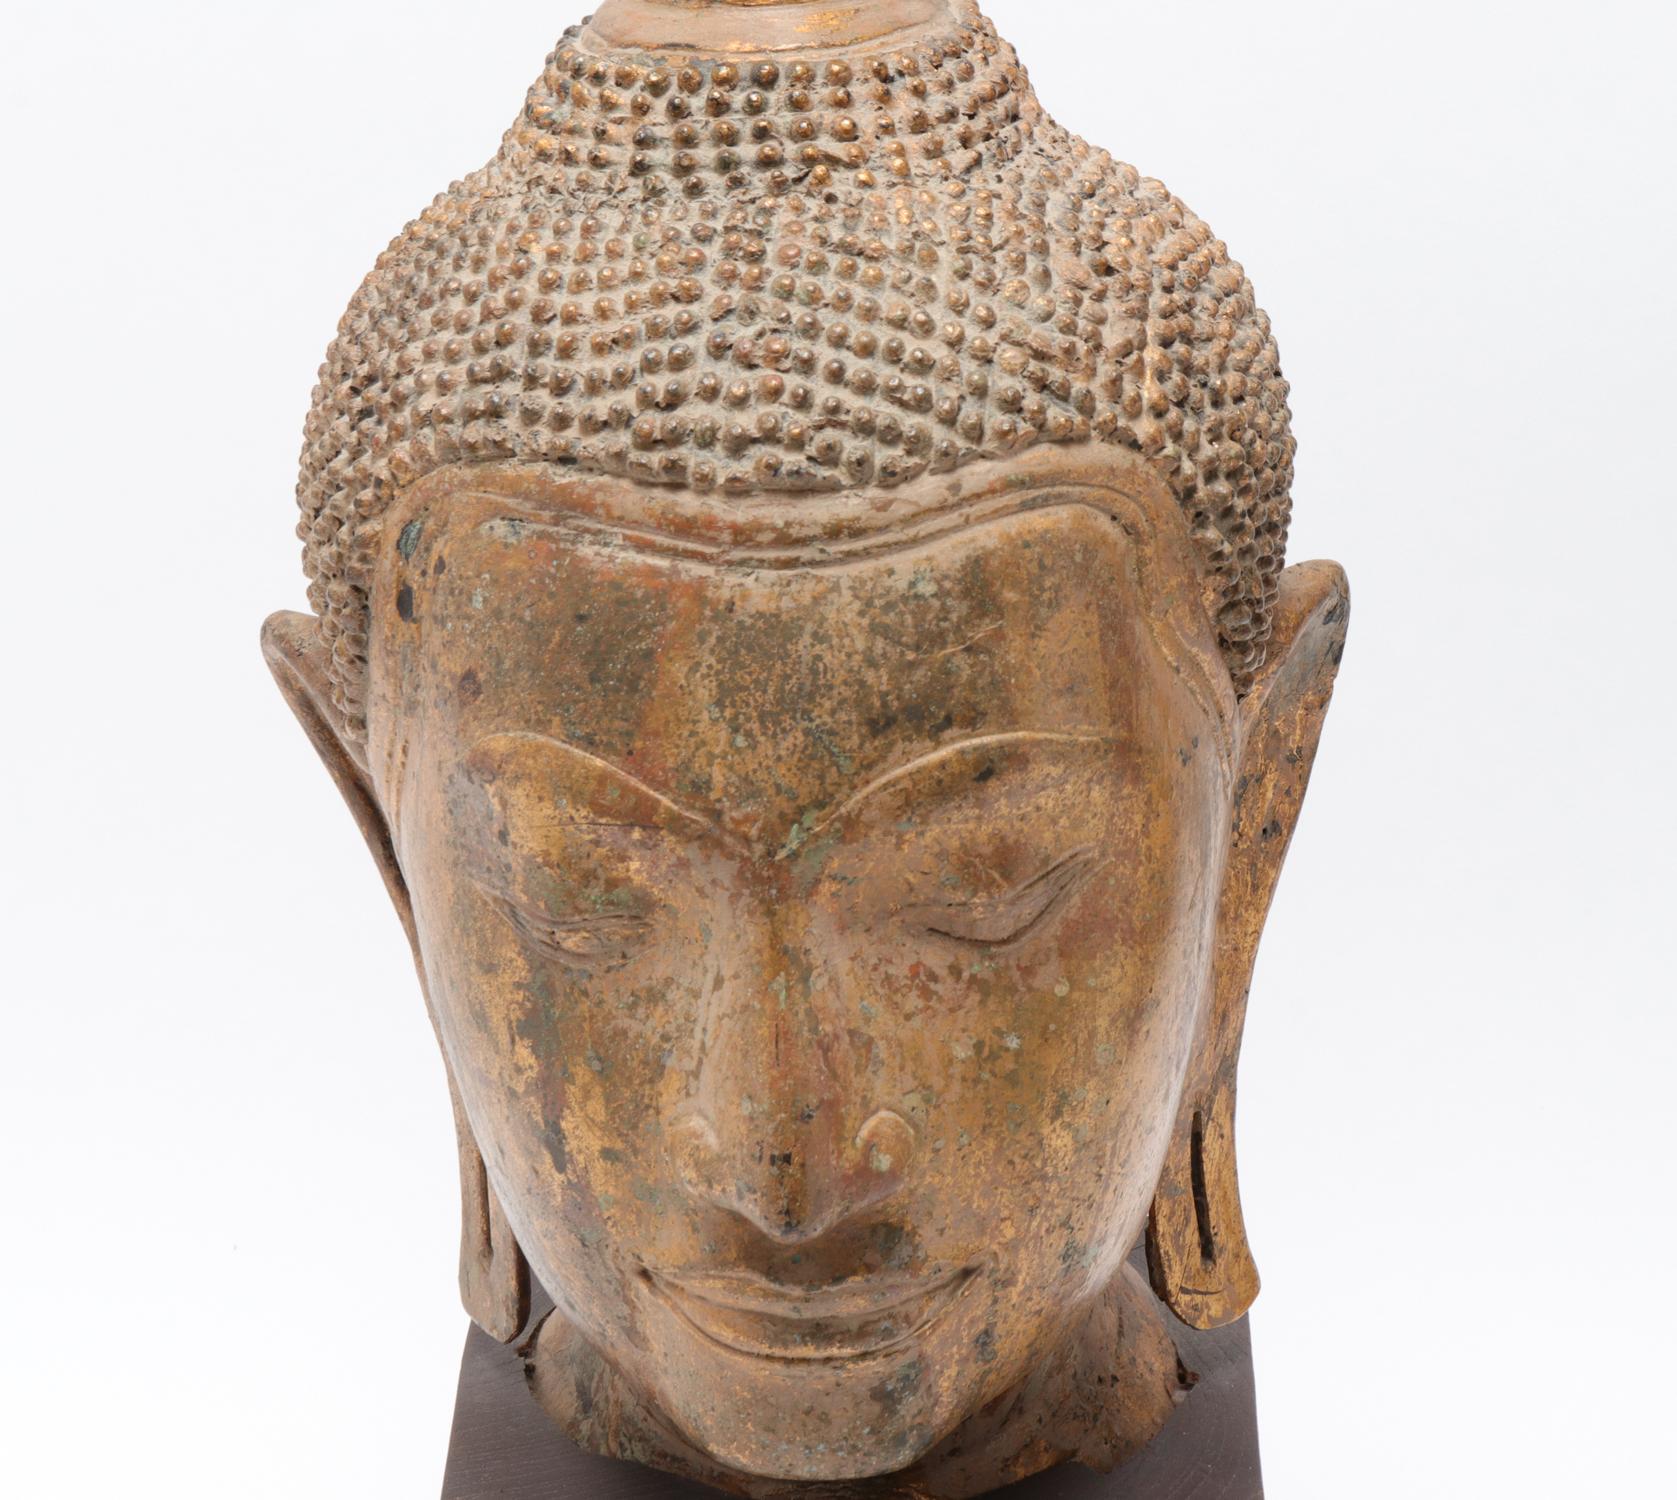 Thai or Cambodian gilt bronze Buddha head depicted with ushnisha and elongated earlobes, mounted on wood base.